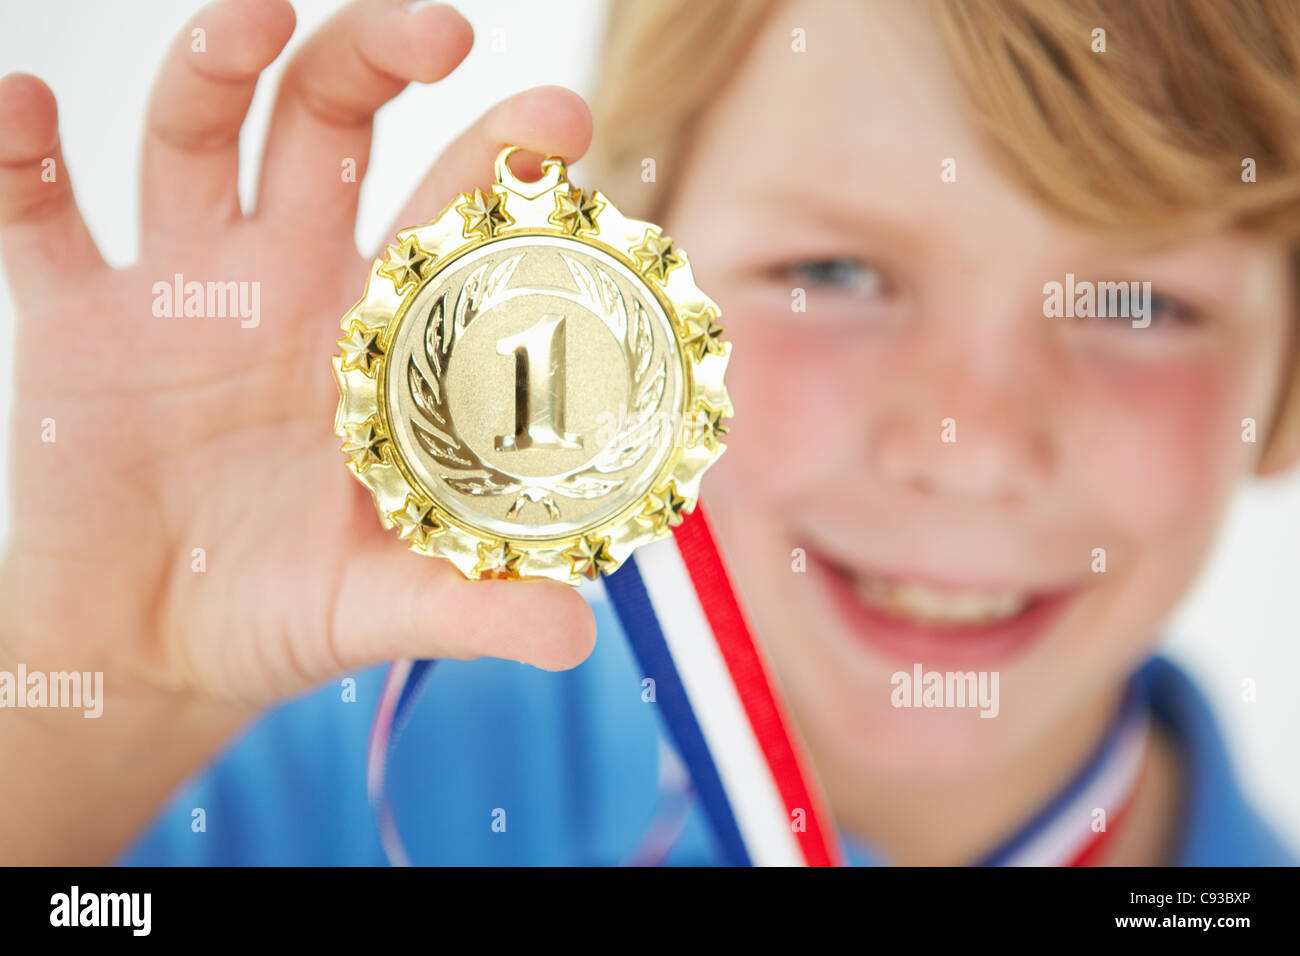 Joven mostrando medalla Foto de stock